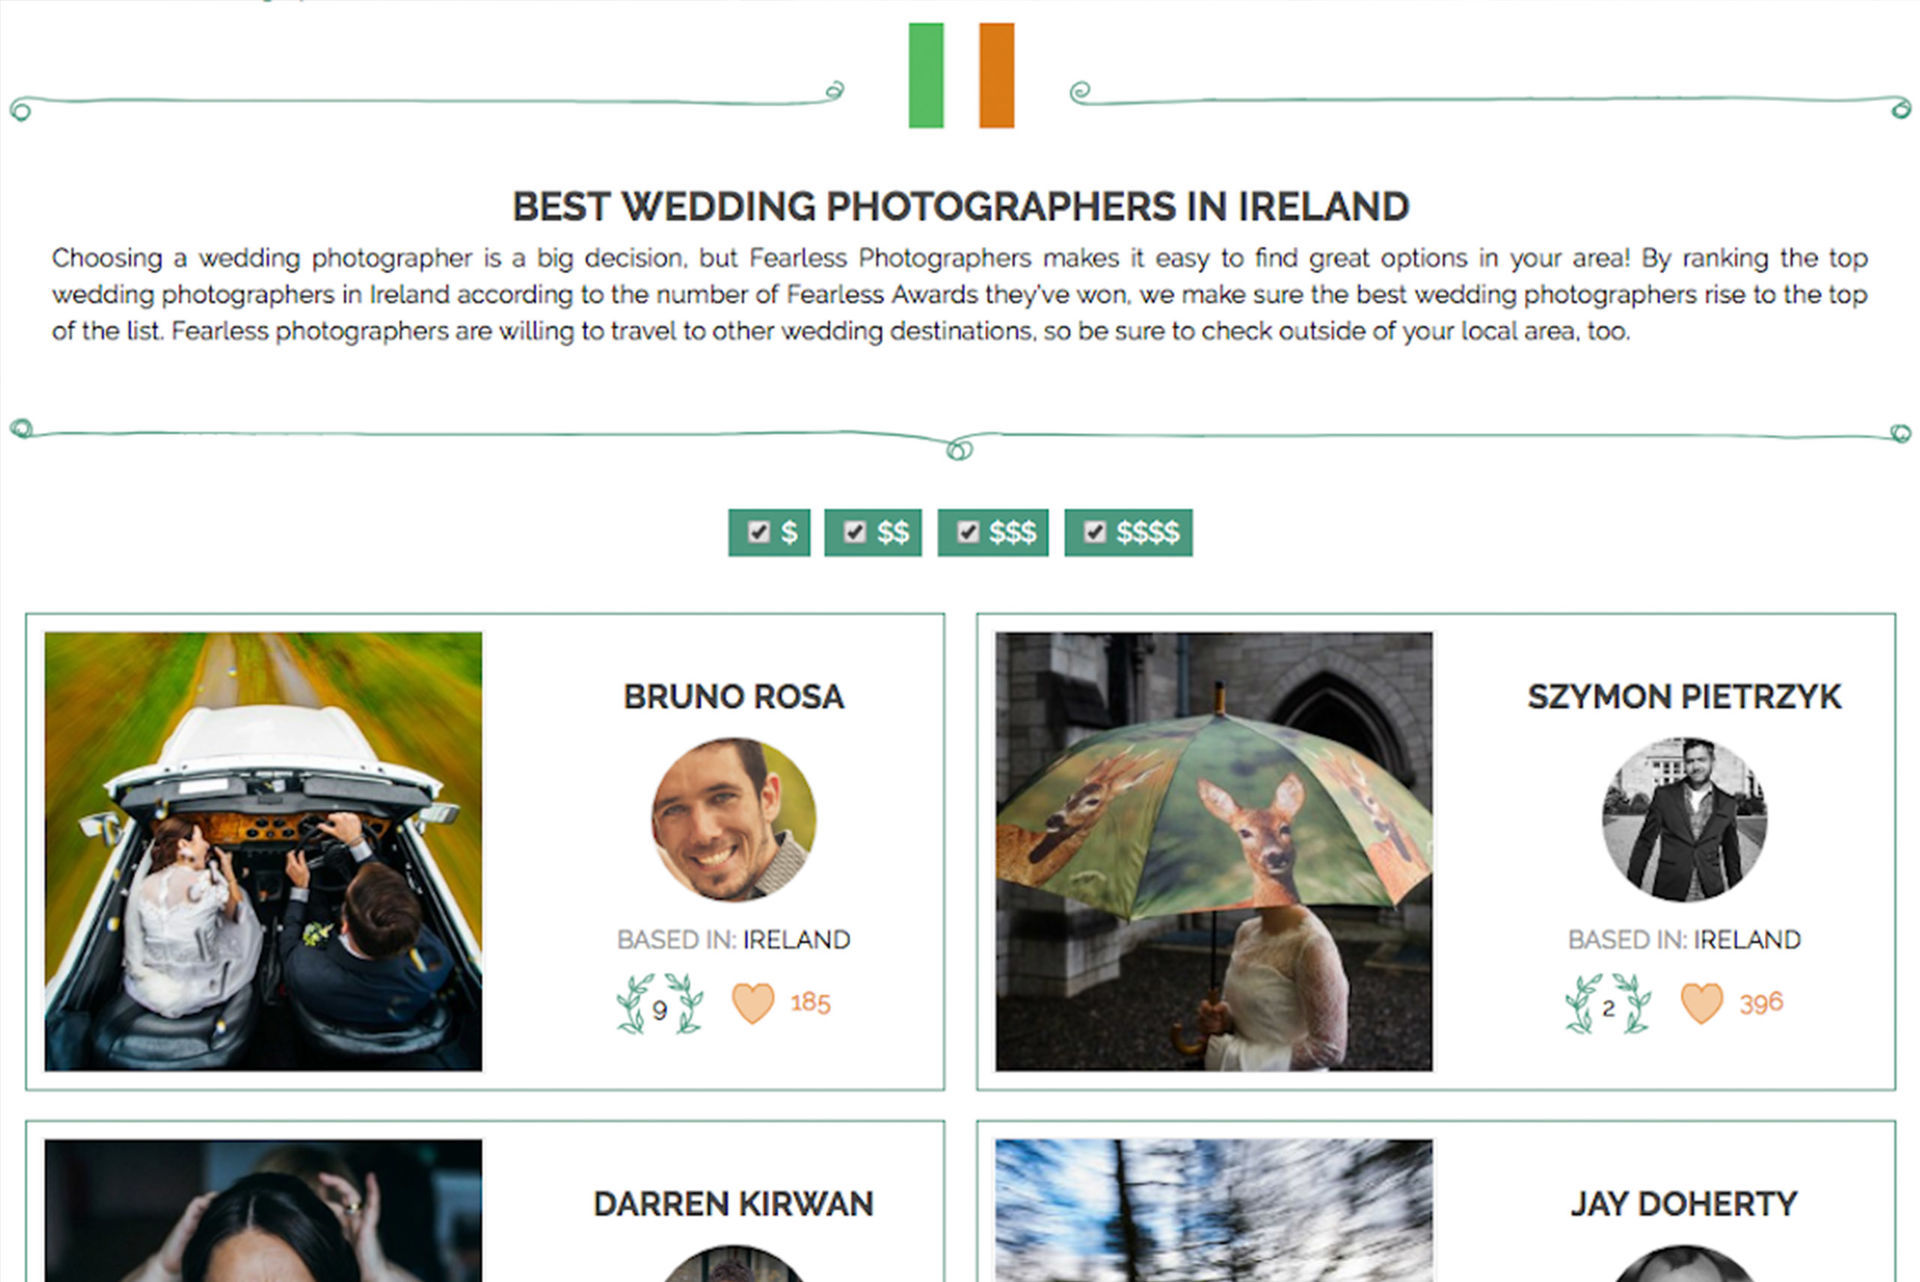 Best Fearless Photographer in Ireland